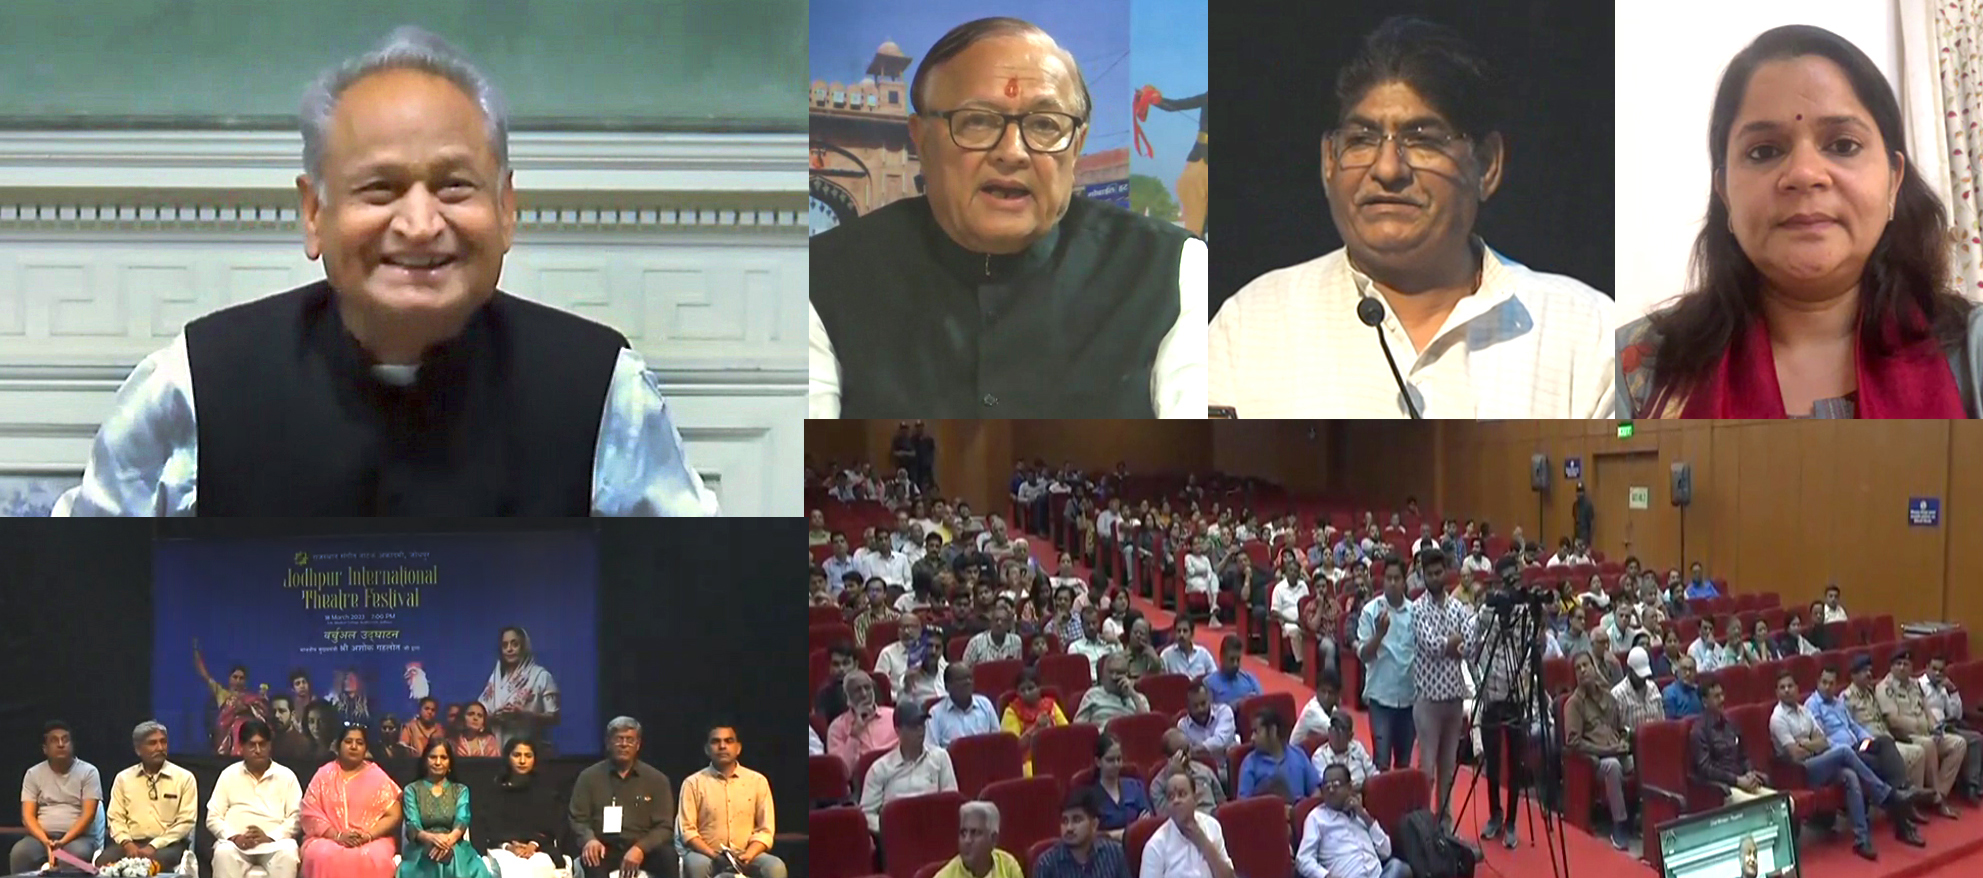 मुख्यमंत्री अशोक गहलोत ने किया जोधपुर इंटरनेशनल थिएटर फेस्टिवल का उद्घाटन